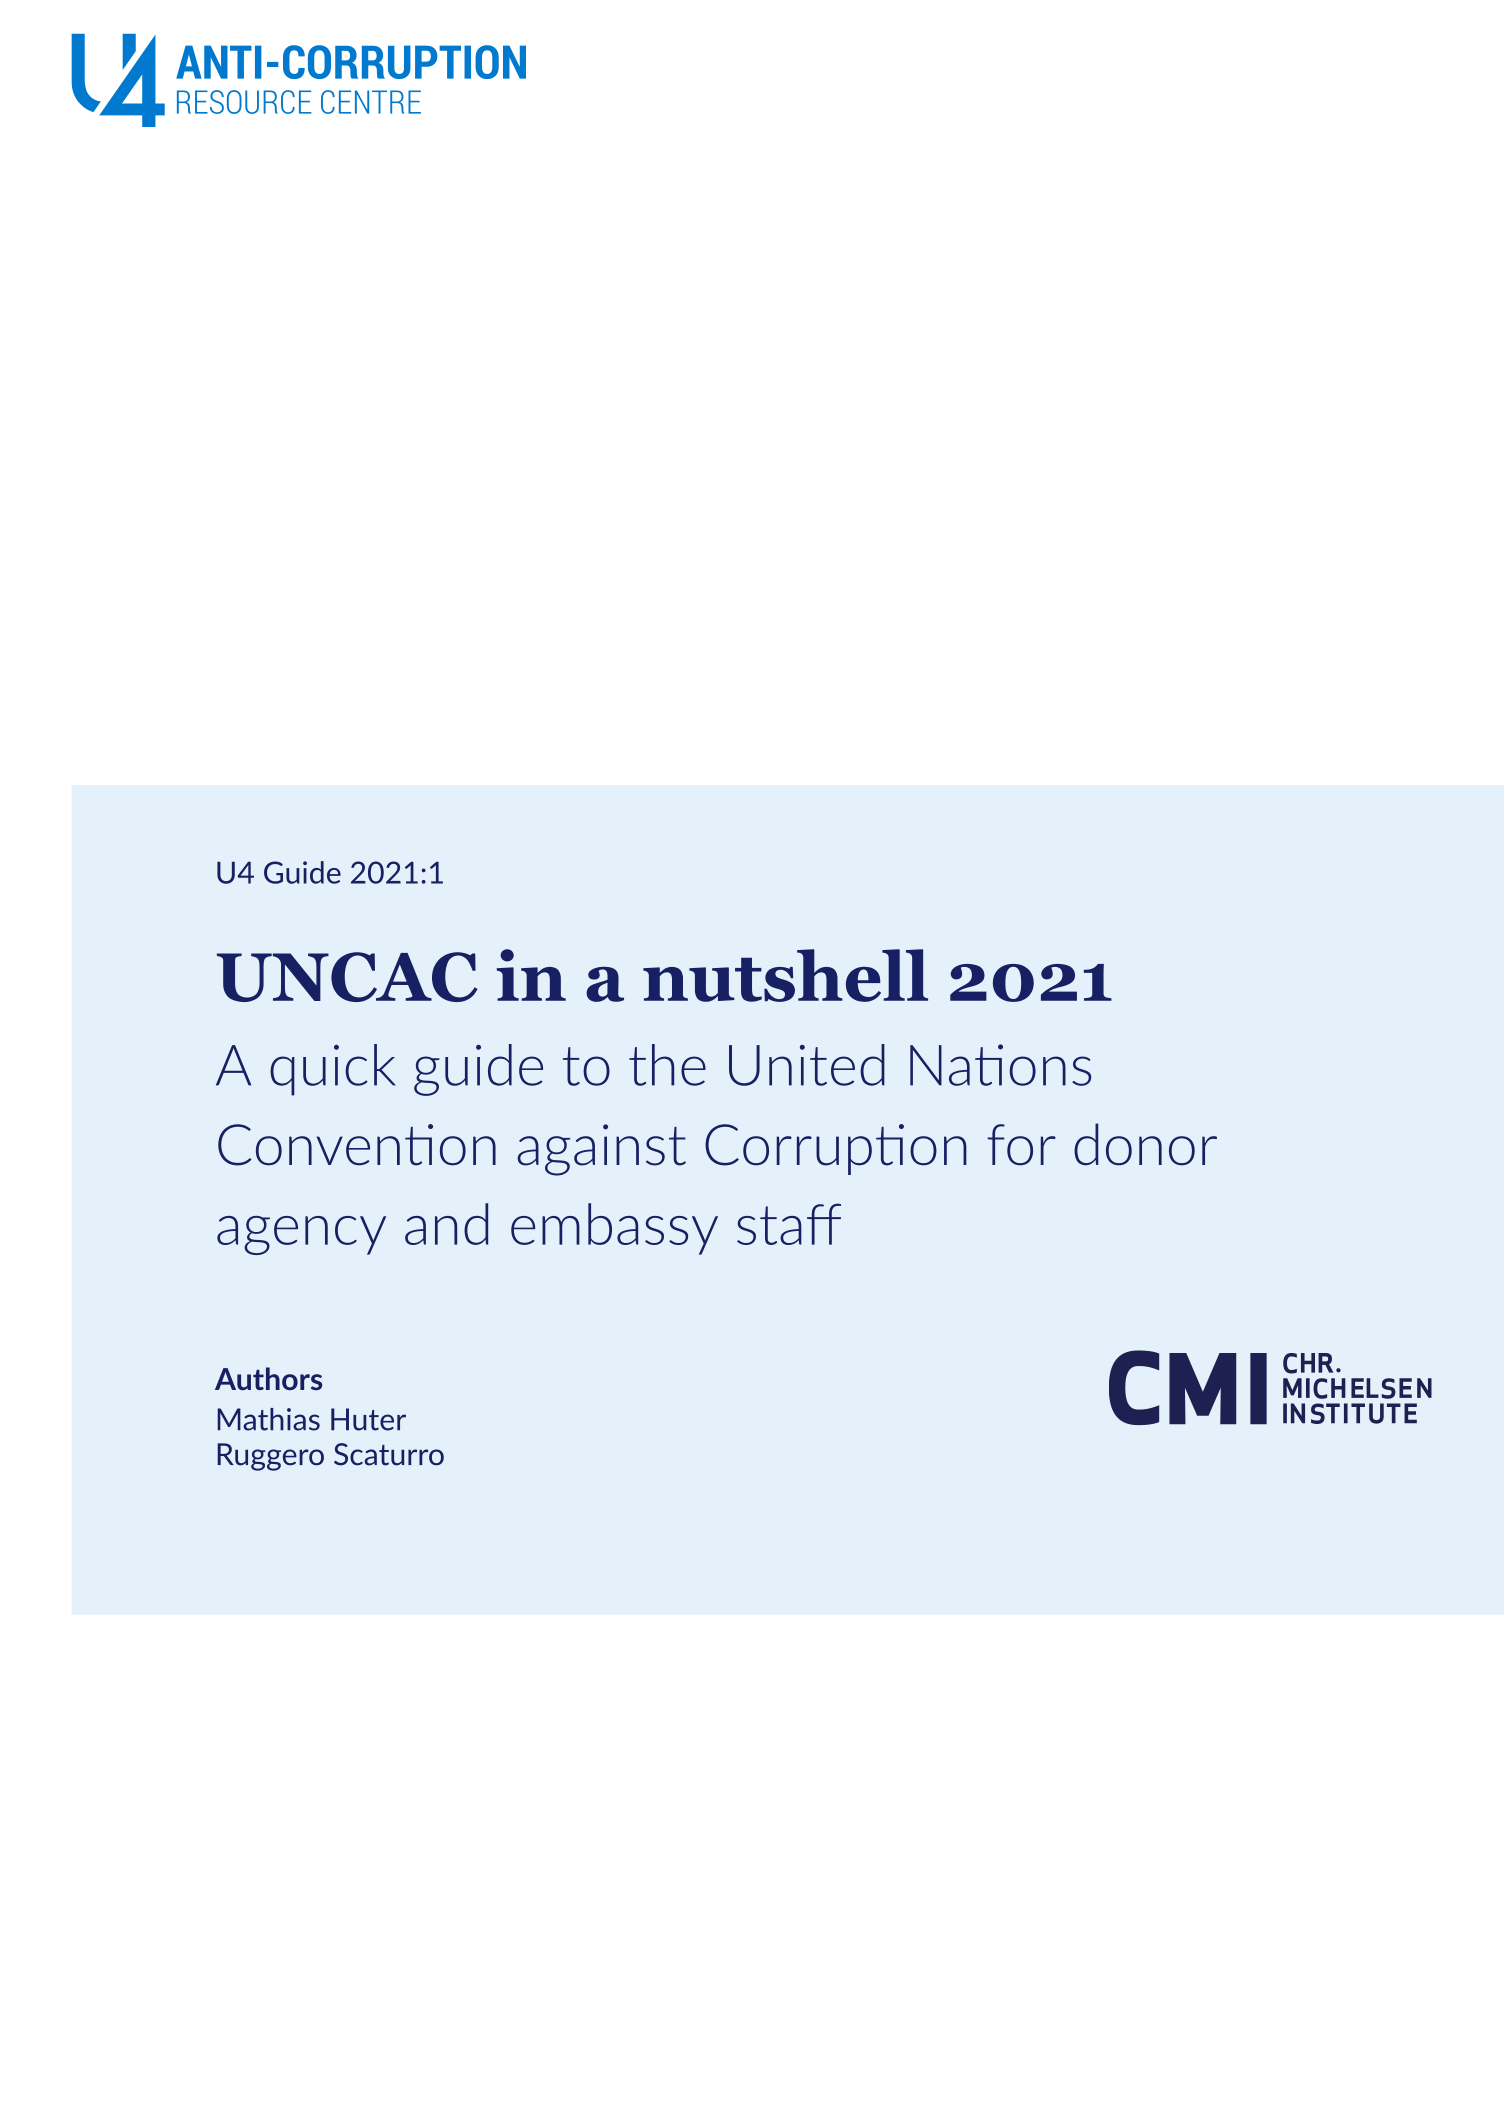 UNCAC in a nutshell 2021